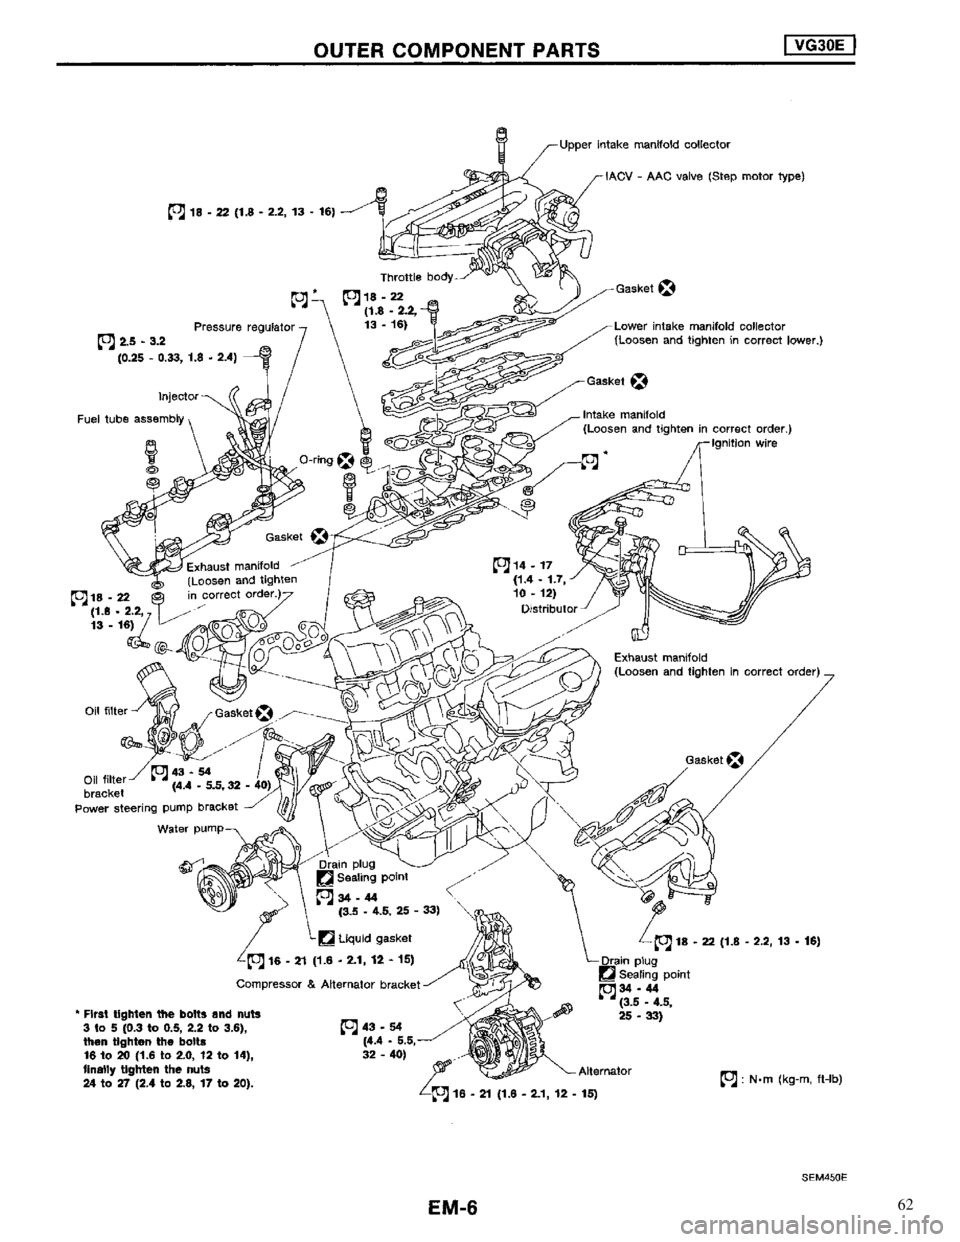 NISSAN MAXIMA 1994 A32 / 4.G Engine Mechanical Workshop Manual 62 